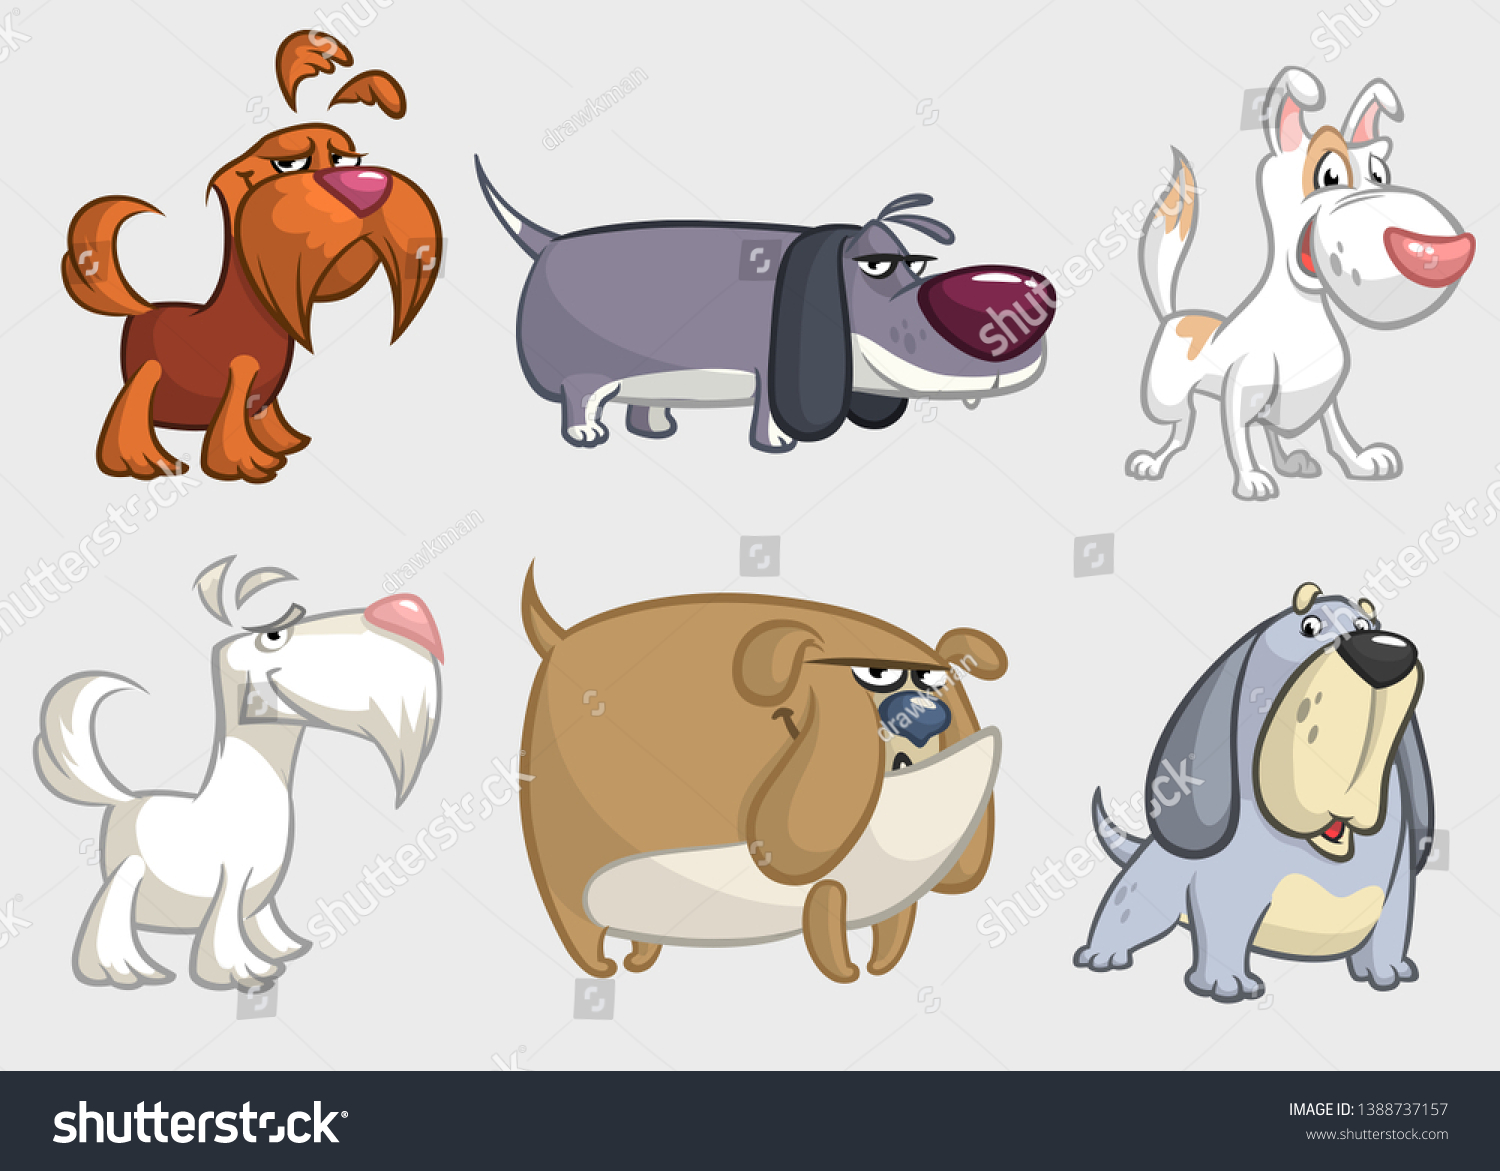 SVG of Cartoon dogs set. Retriever, dachshund, terrier,pitbull, spaniel, bulldog, basset hound, afghan hound svg